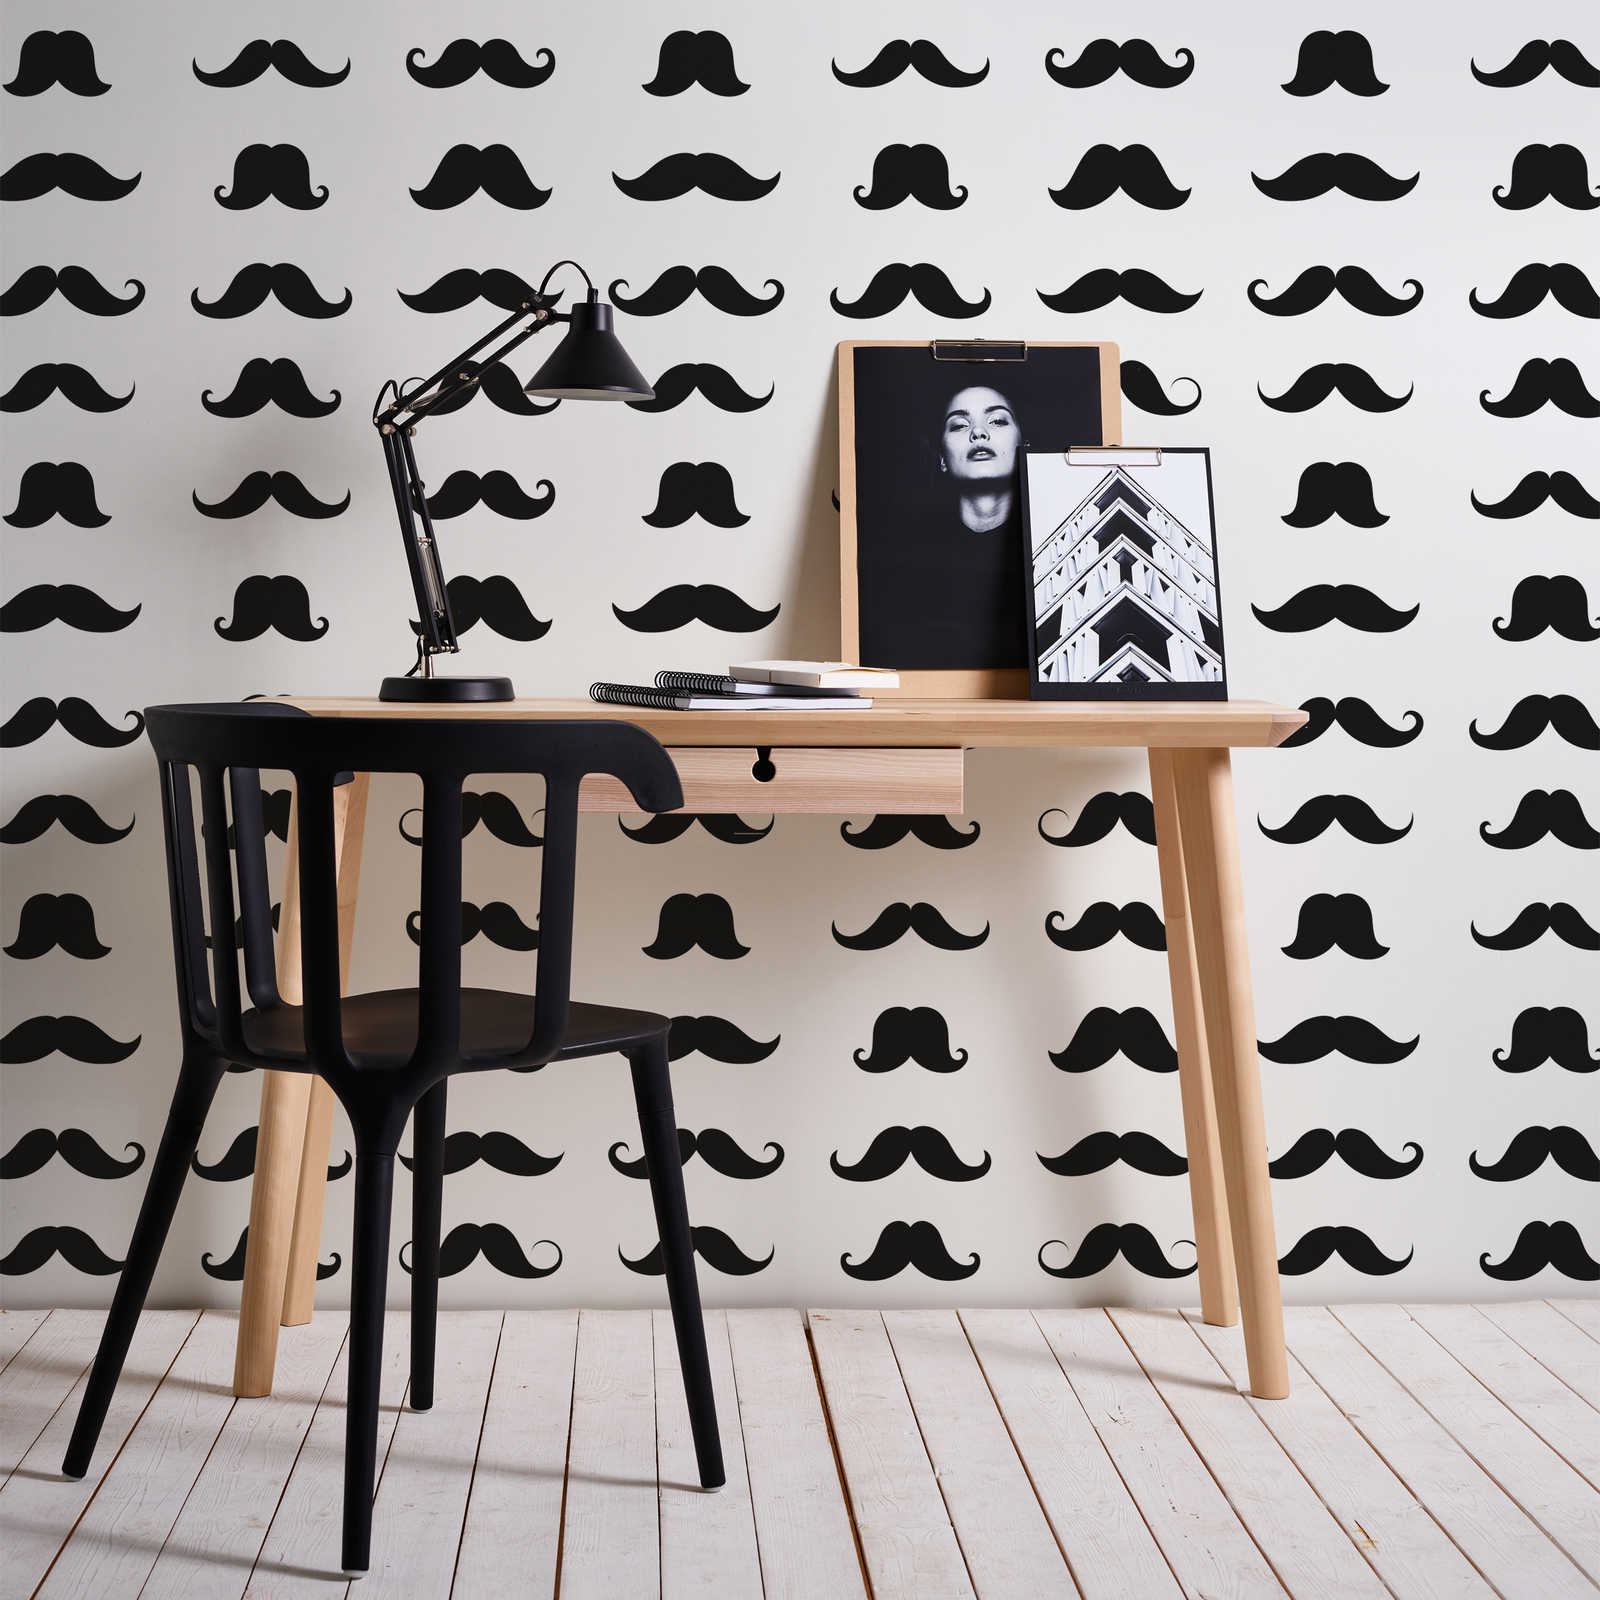 Photo wallpaper Mustache cool moustache motif - Black and white - Matt smooth fleece
